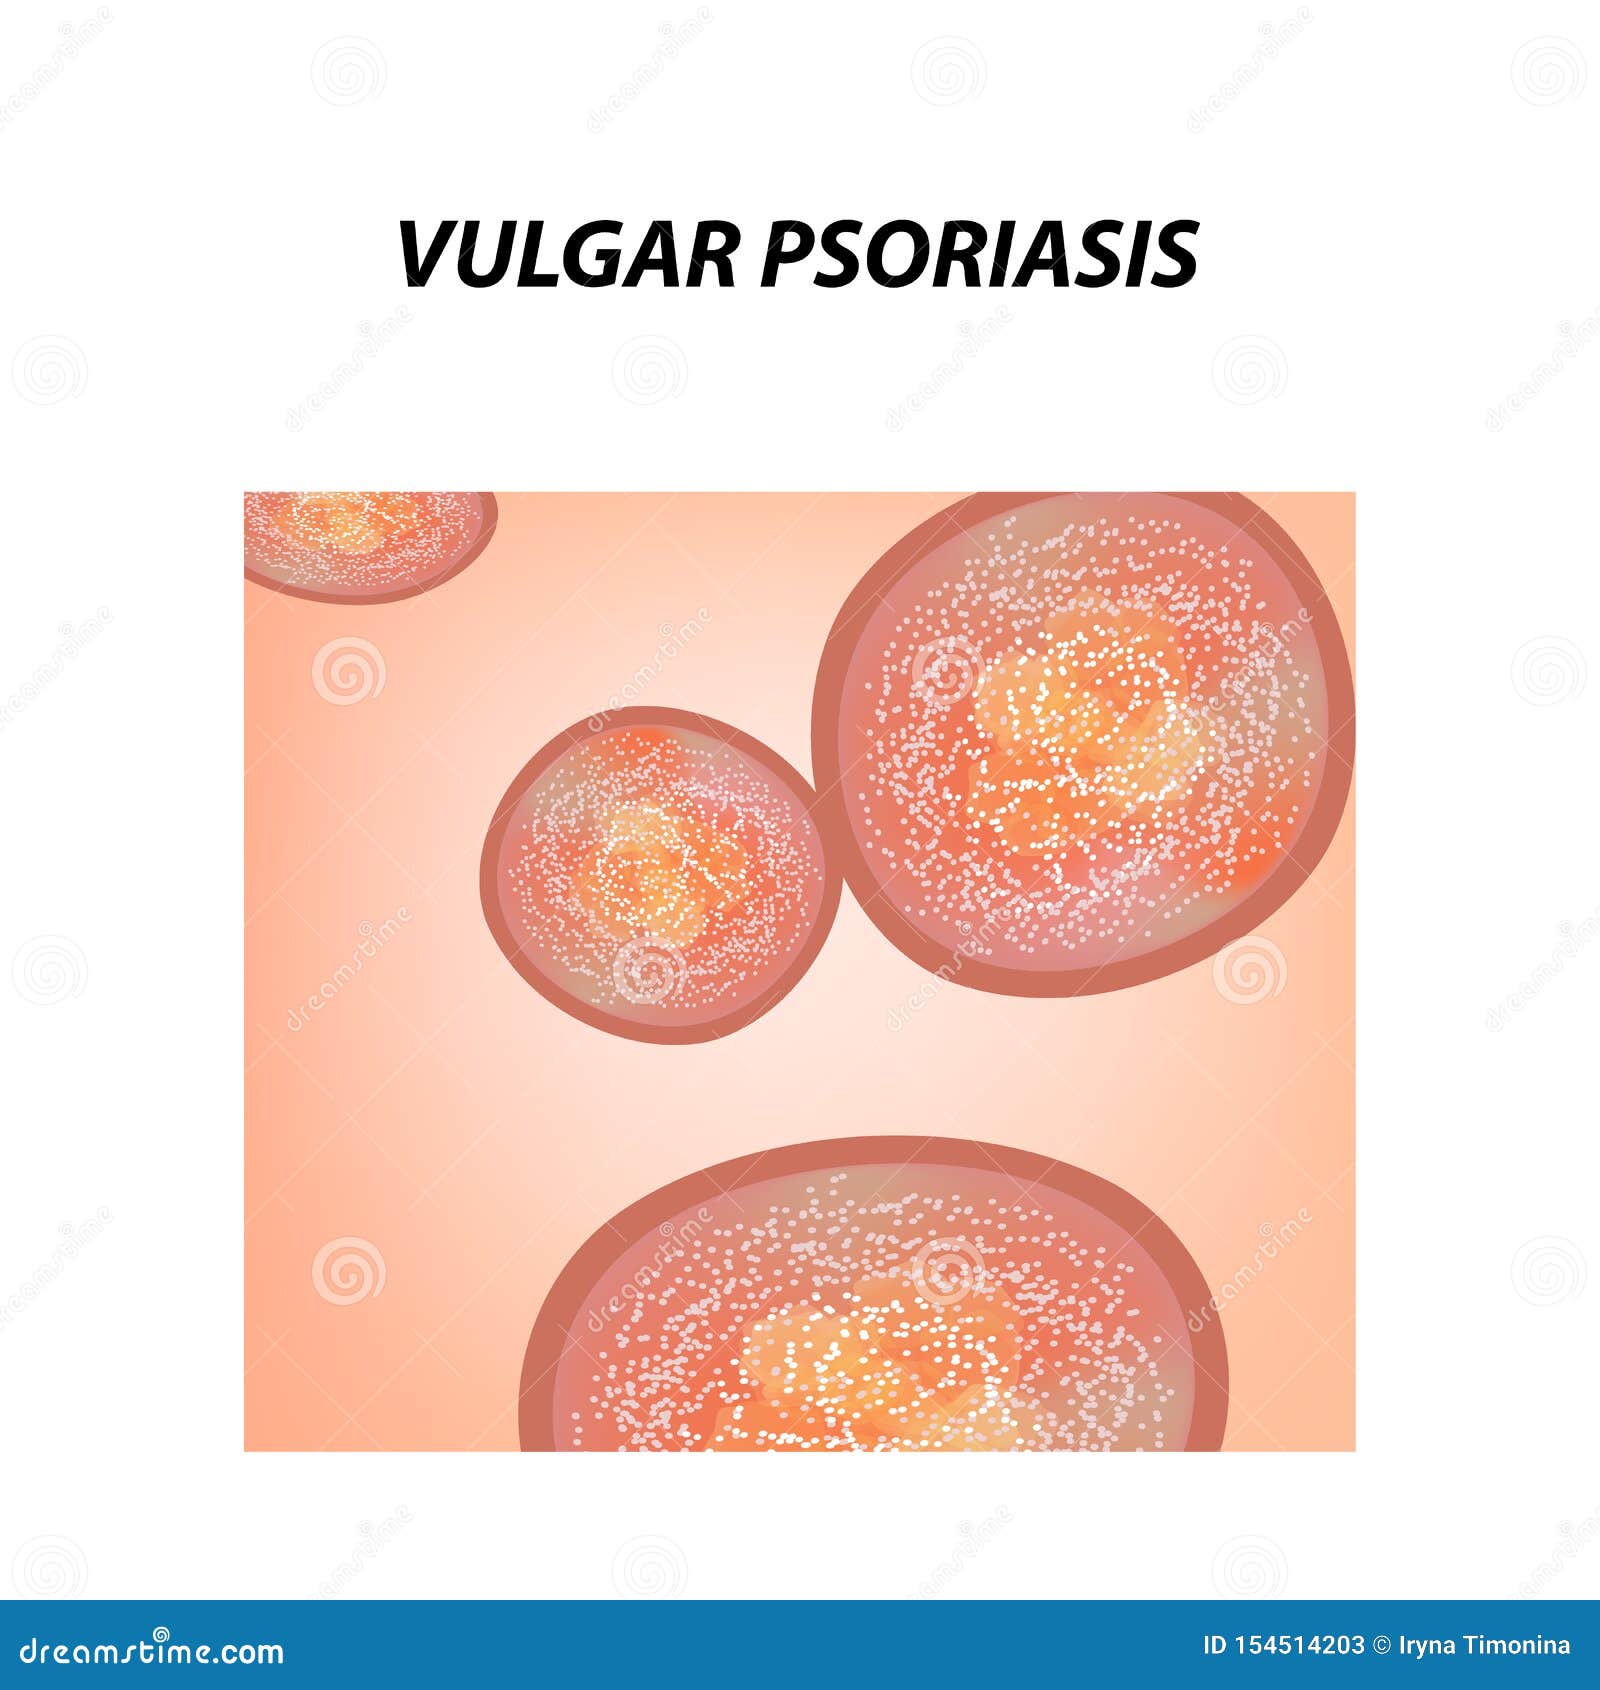 psoriasis vulgar photos